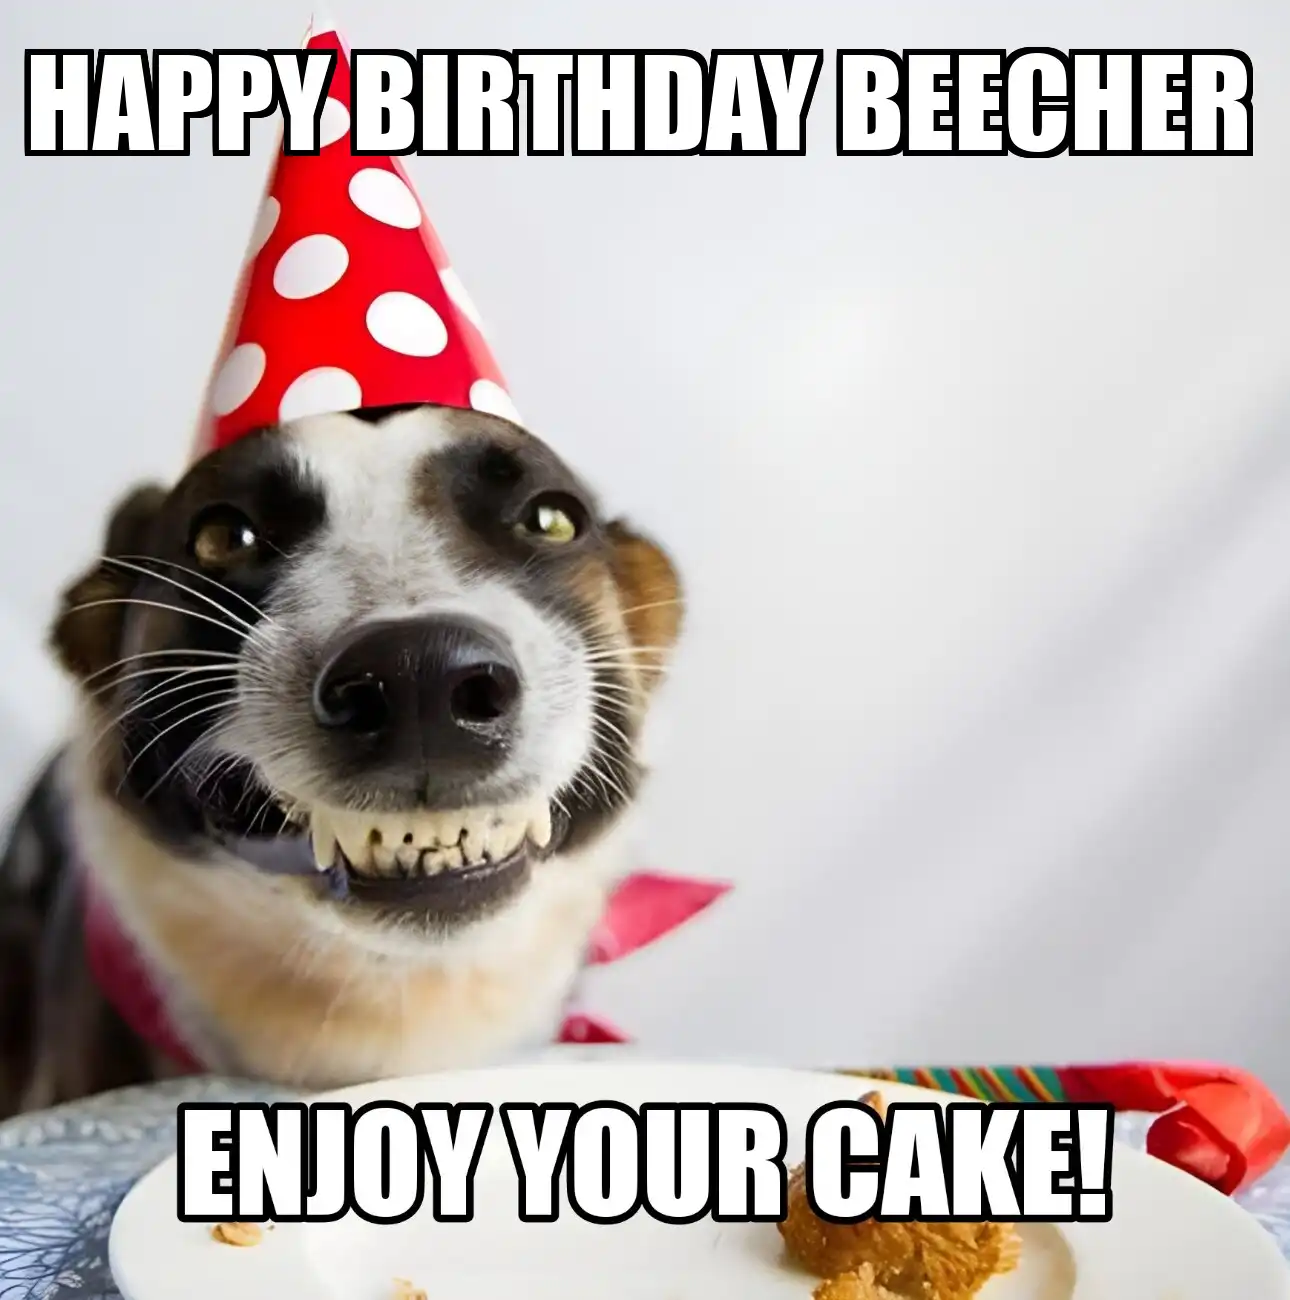 Happy Birthday Beecher Enjoy Your Cake Dog Meme